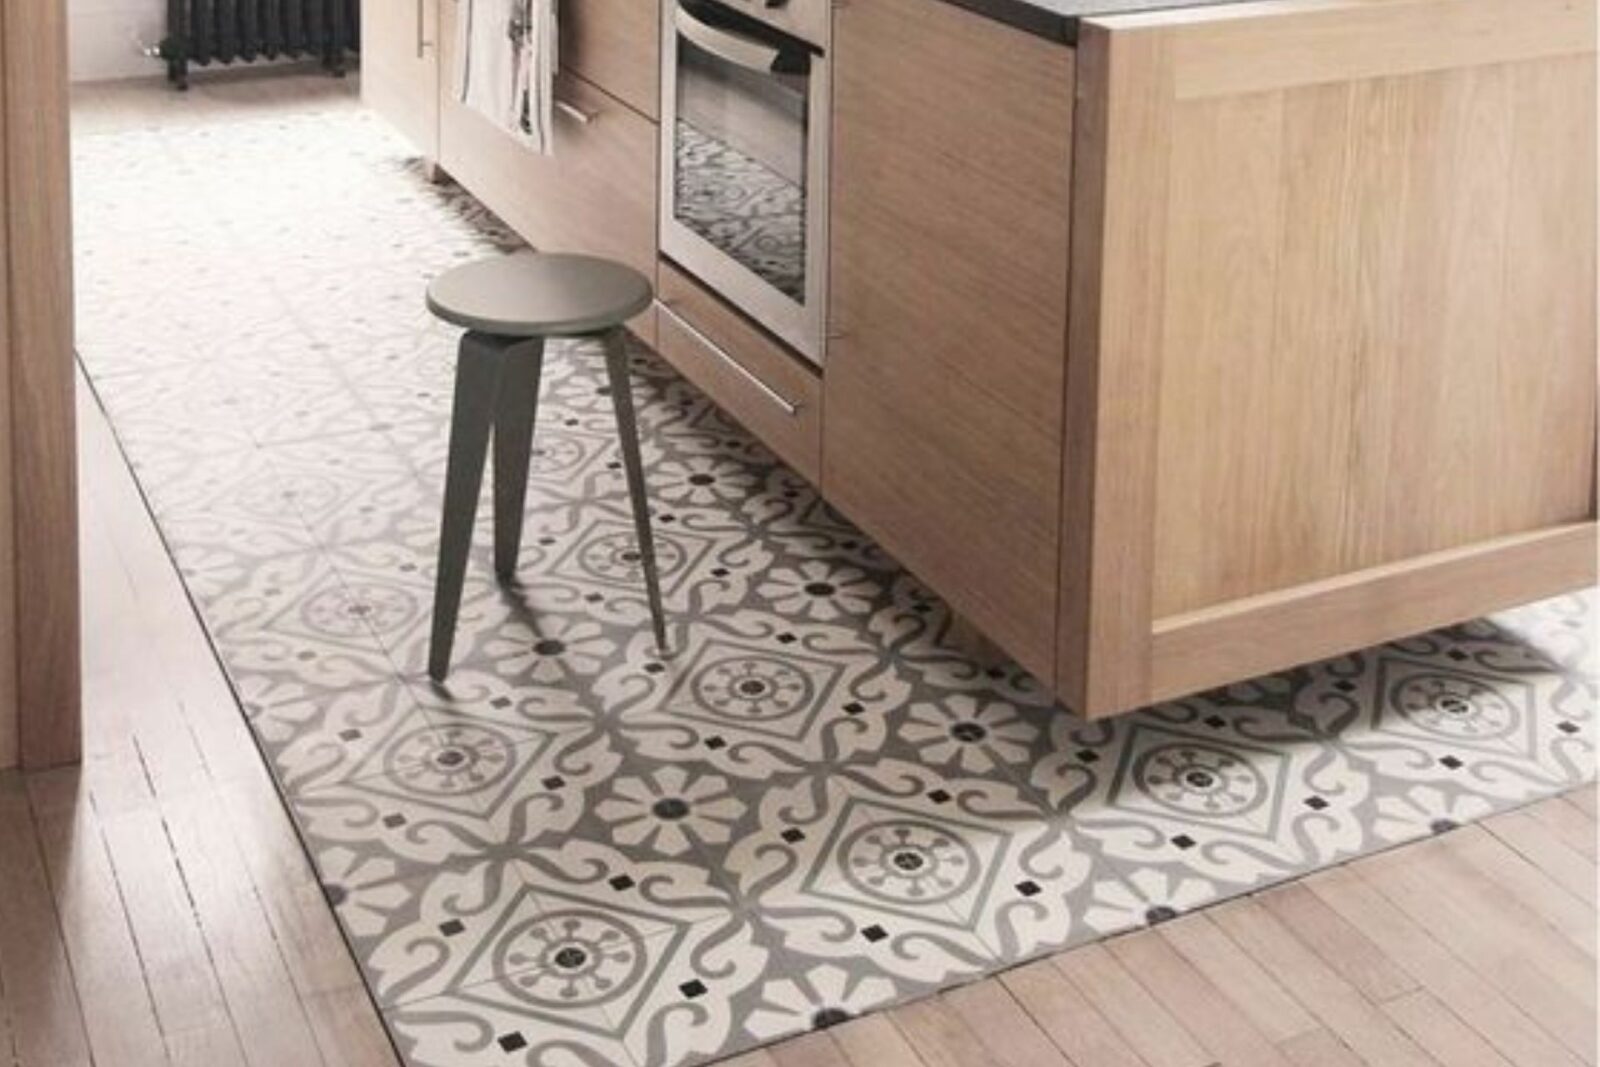 Kitchen Tile To Wood Floor